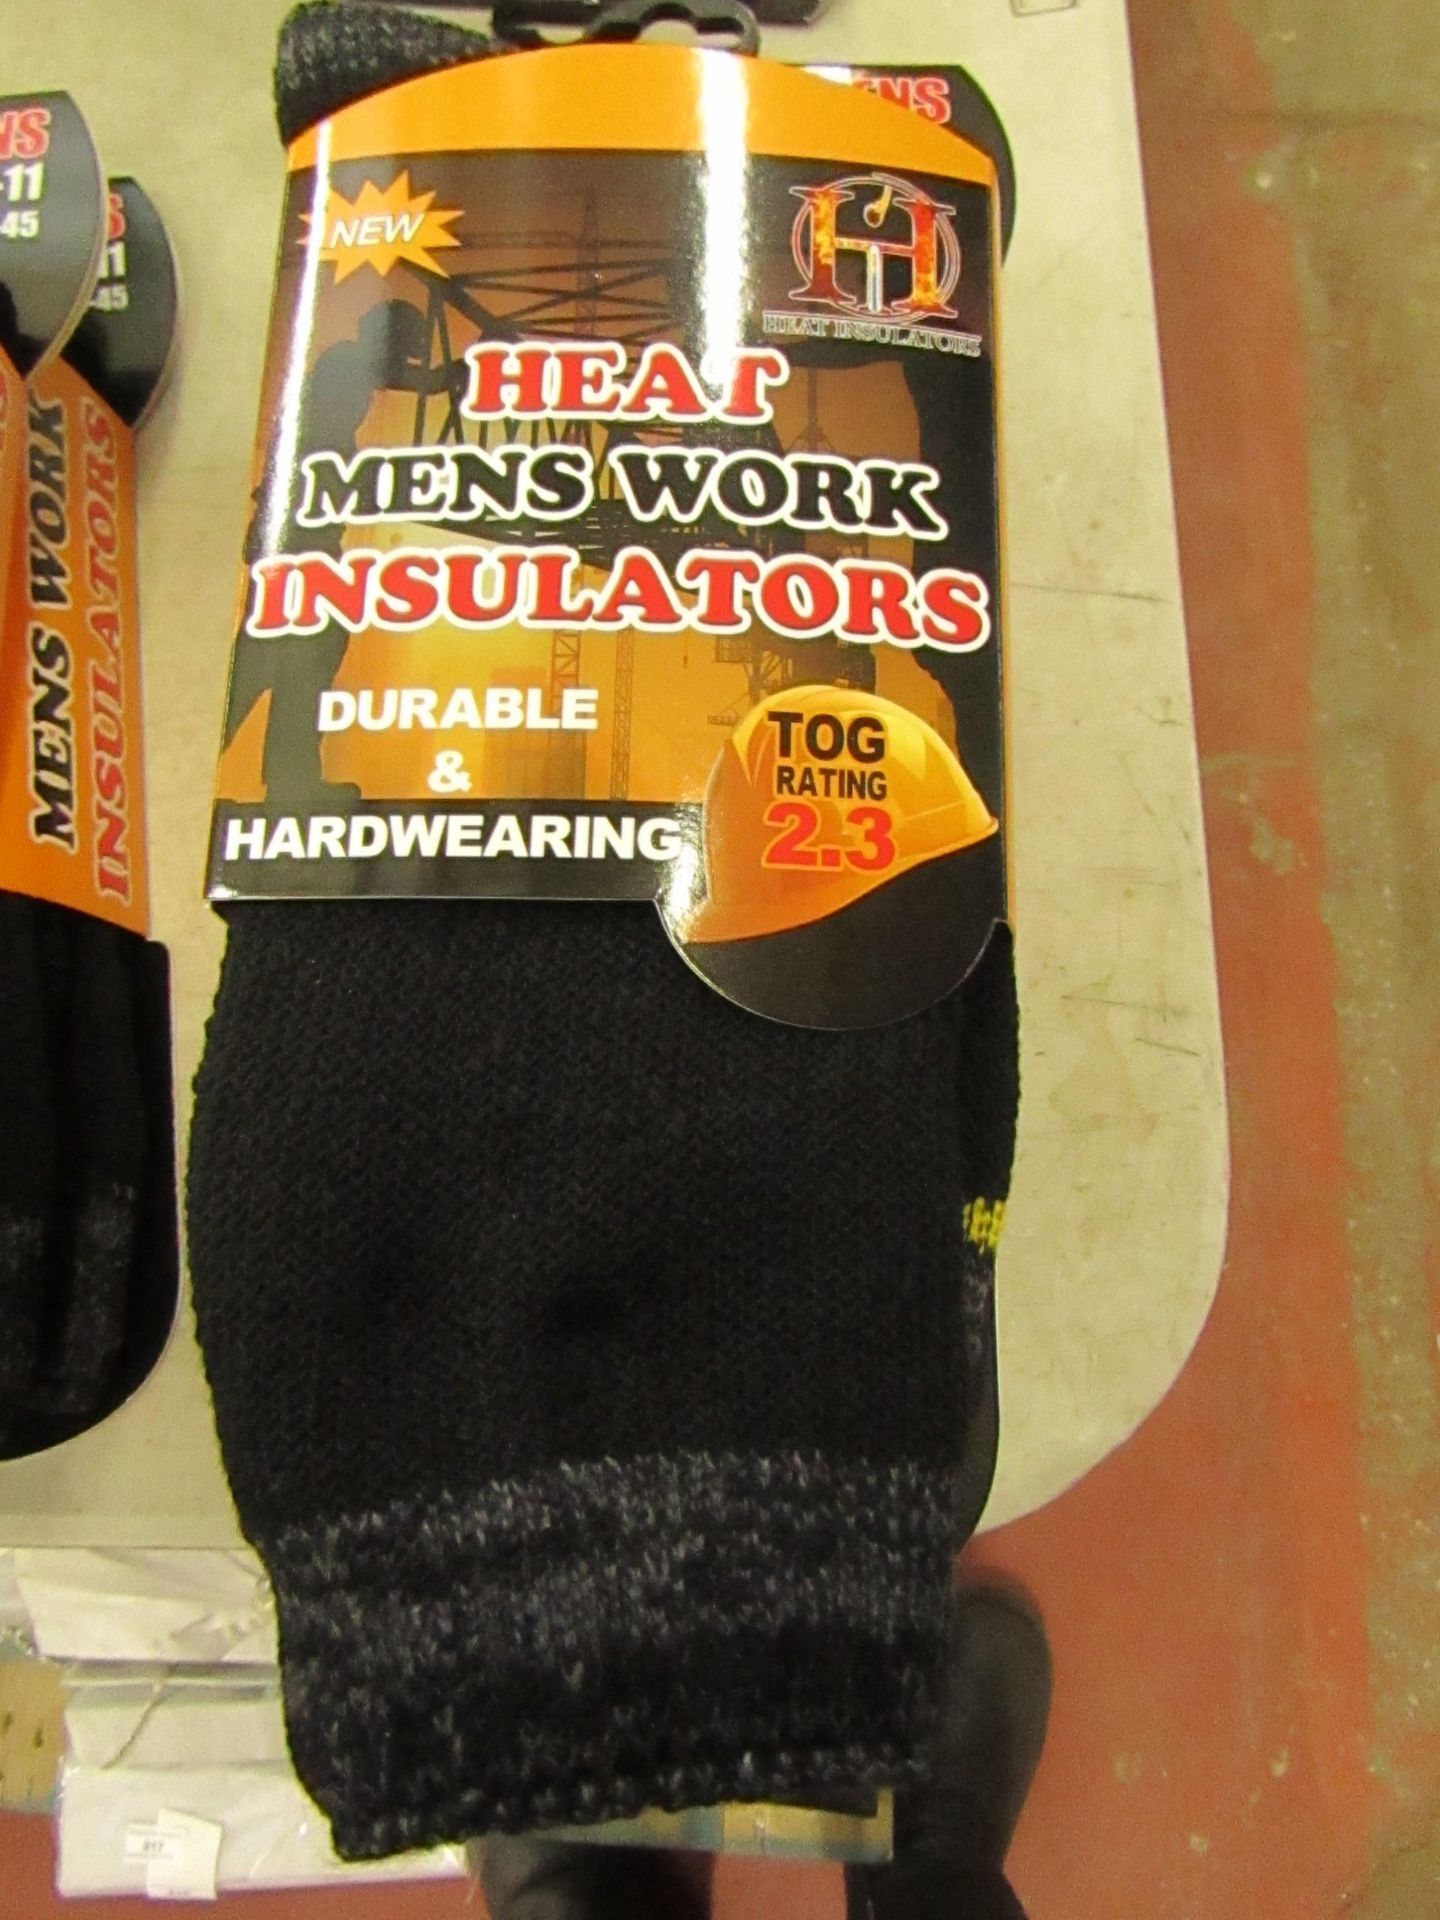 2 x pairs of Men's Heat Mens Work Insulators 2.3 tog rating Durable & Hardwearing with Super